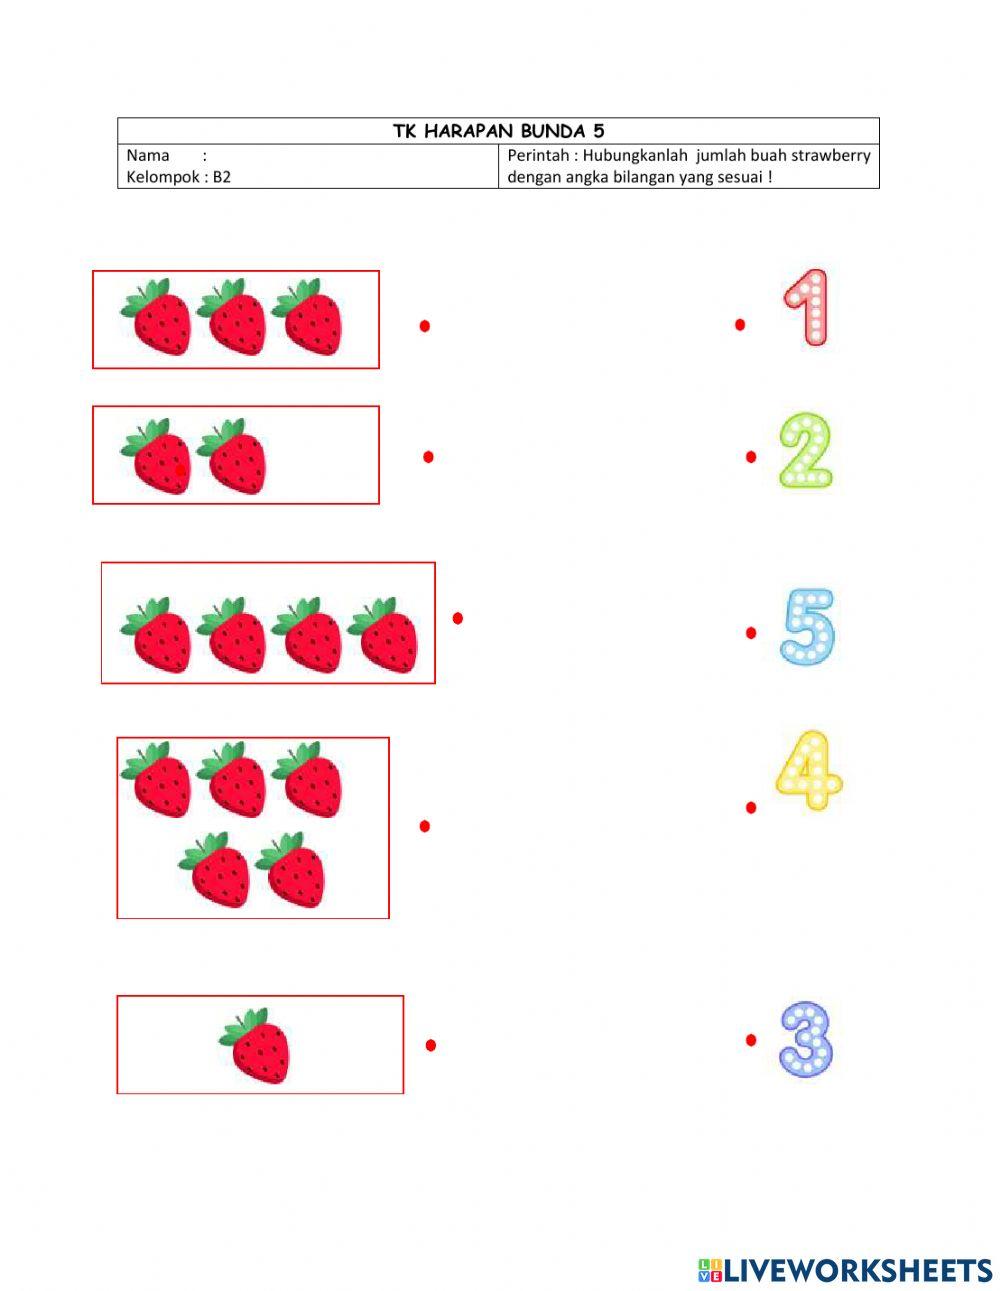 Jumlah buah strawberry